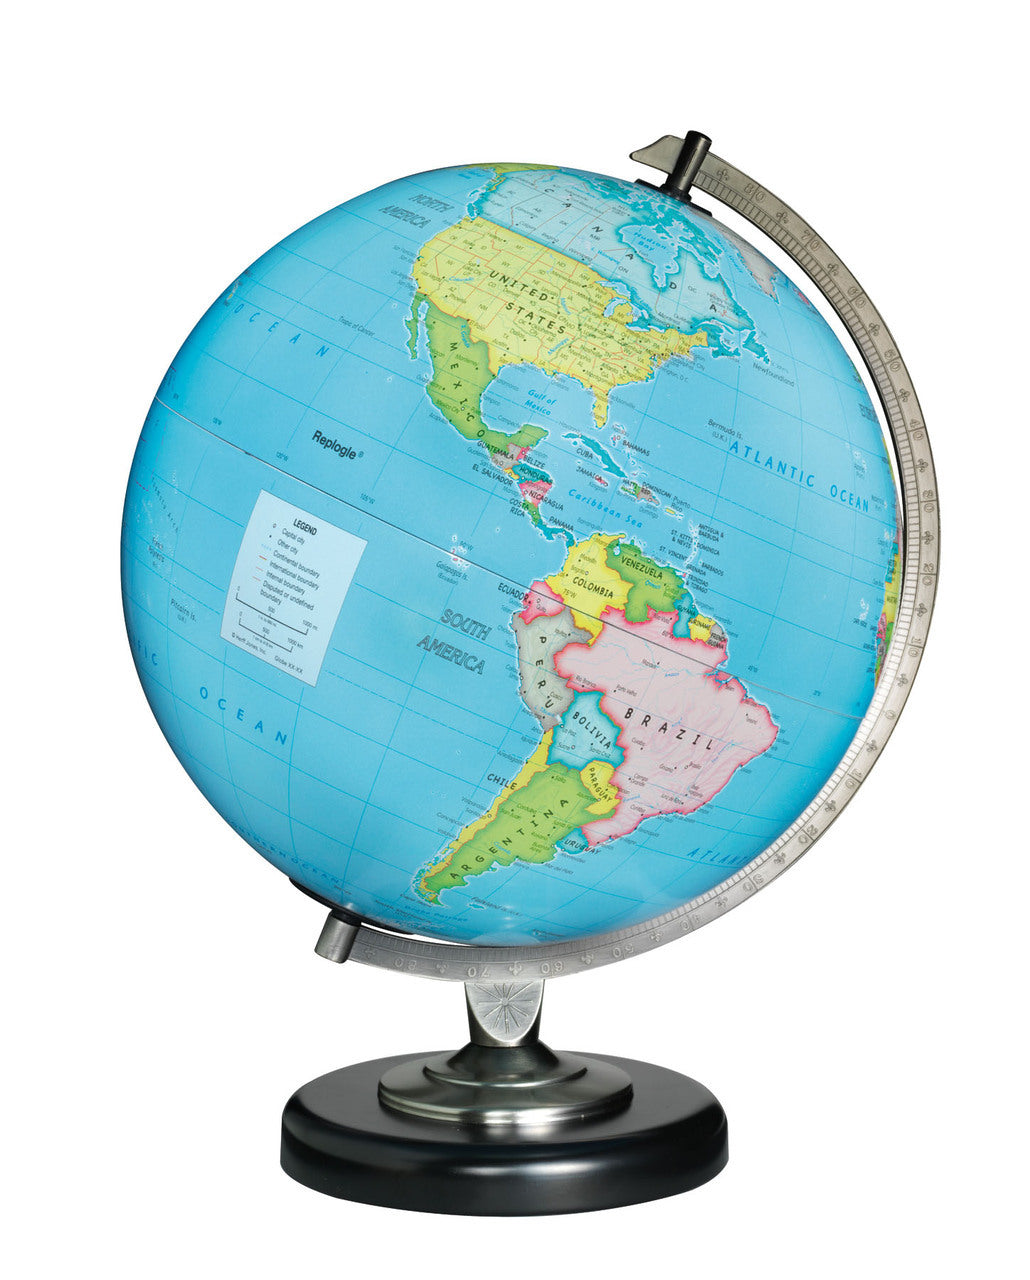 Day-Night 16 Inch Illuminated Desktop World Globe By Replogle Globes